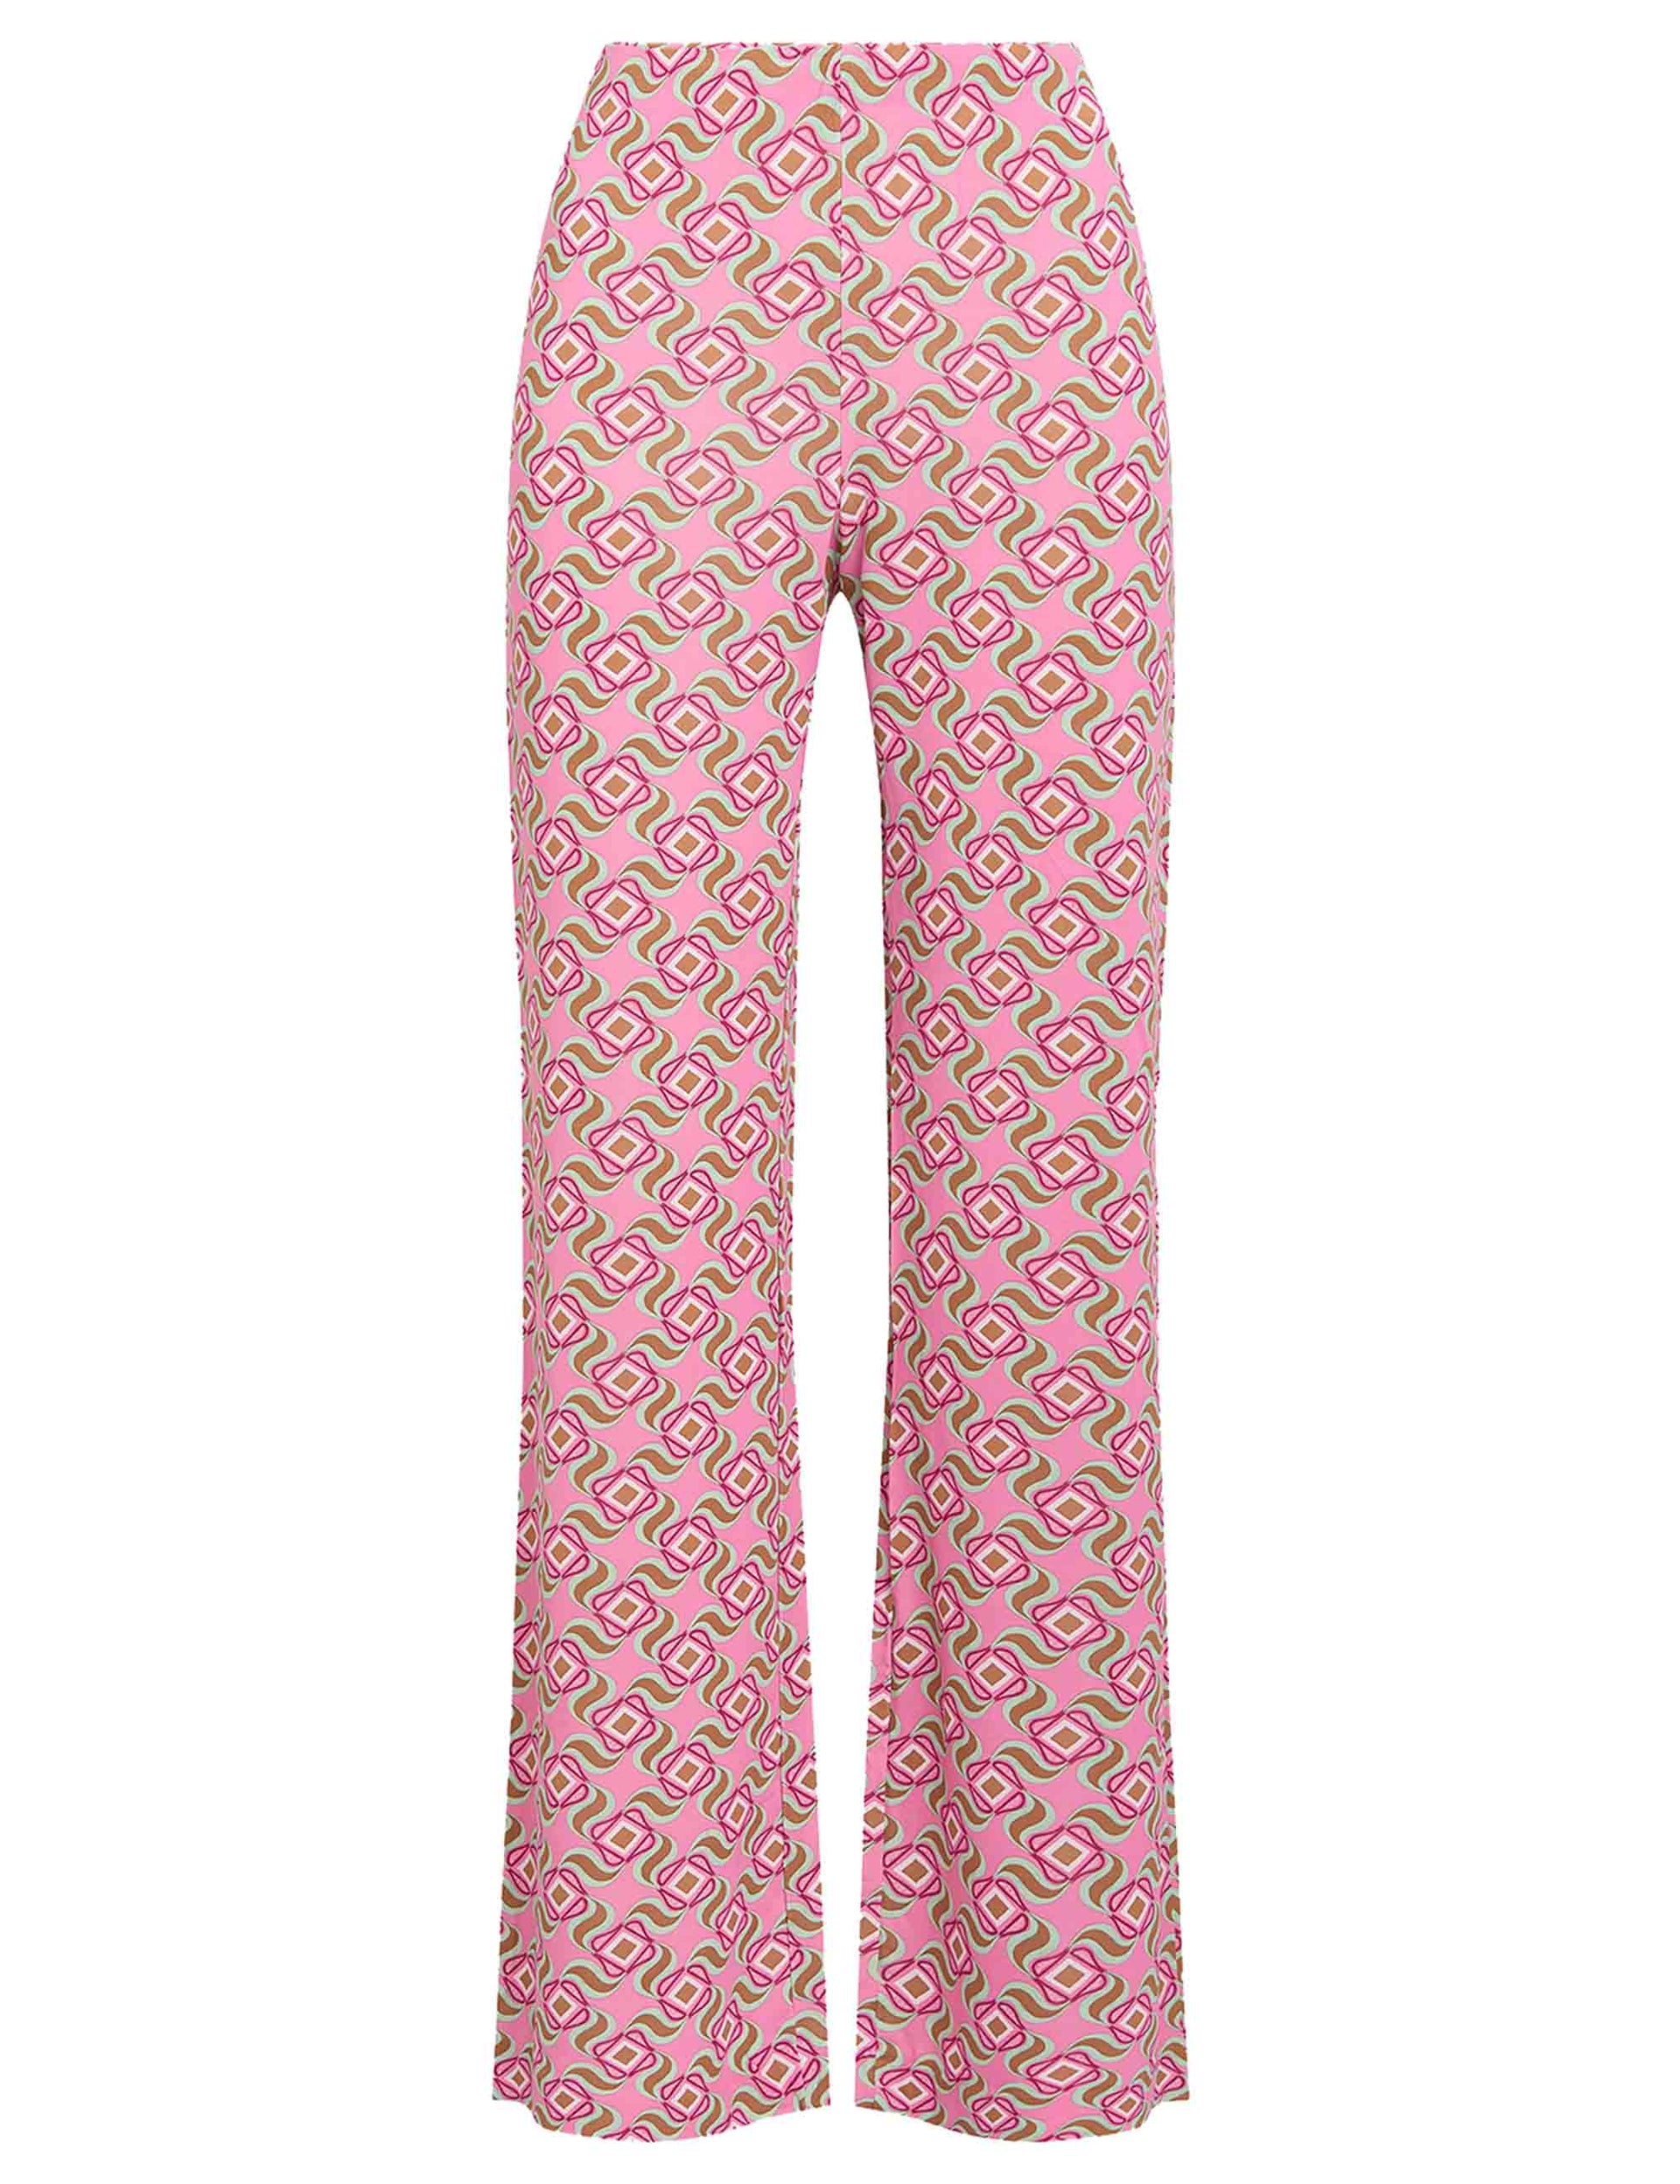 Swirl Print women's trousers in patterned pink stretch jersey